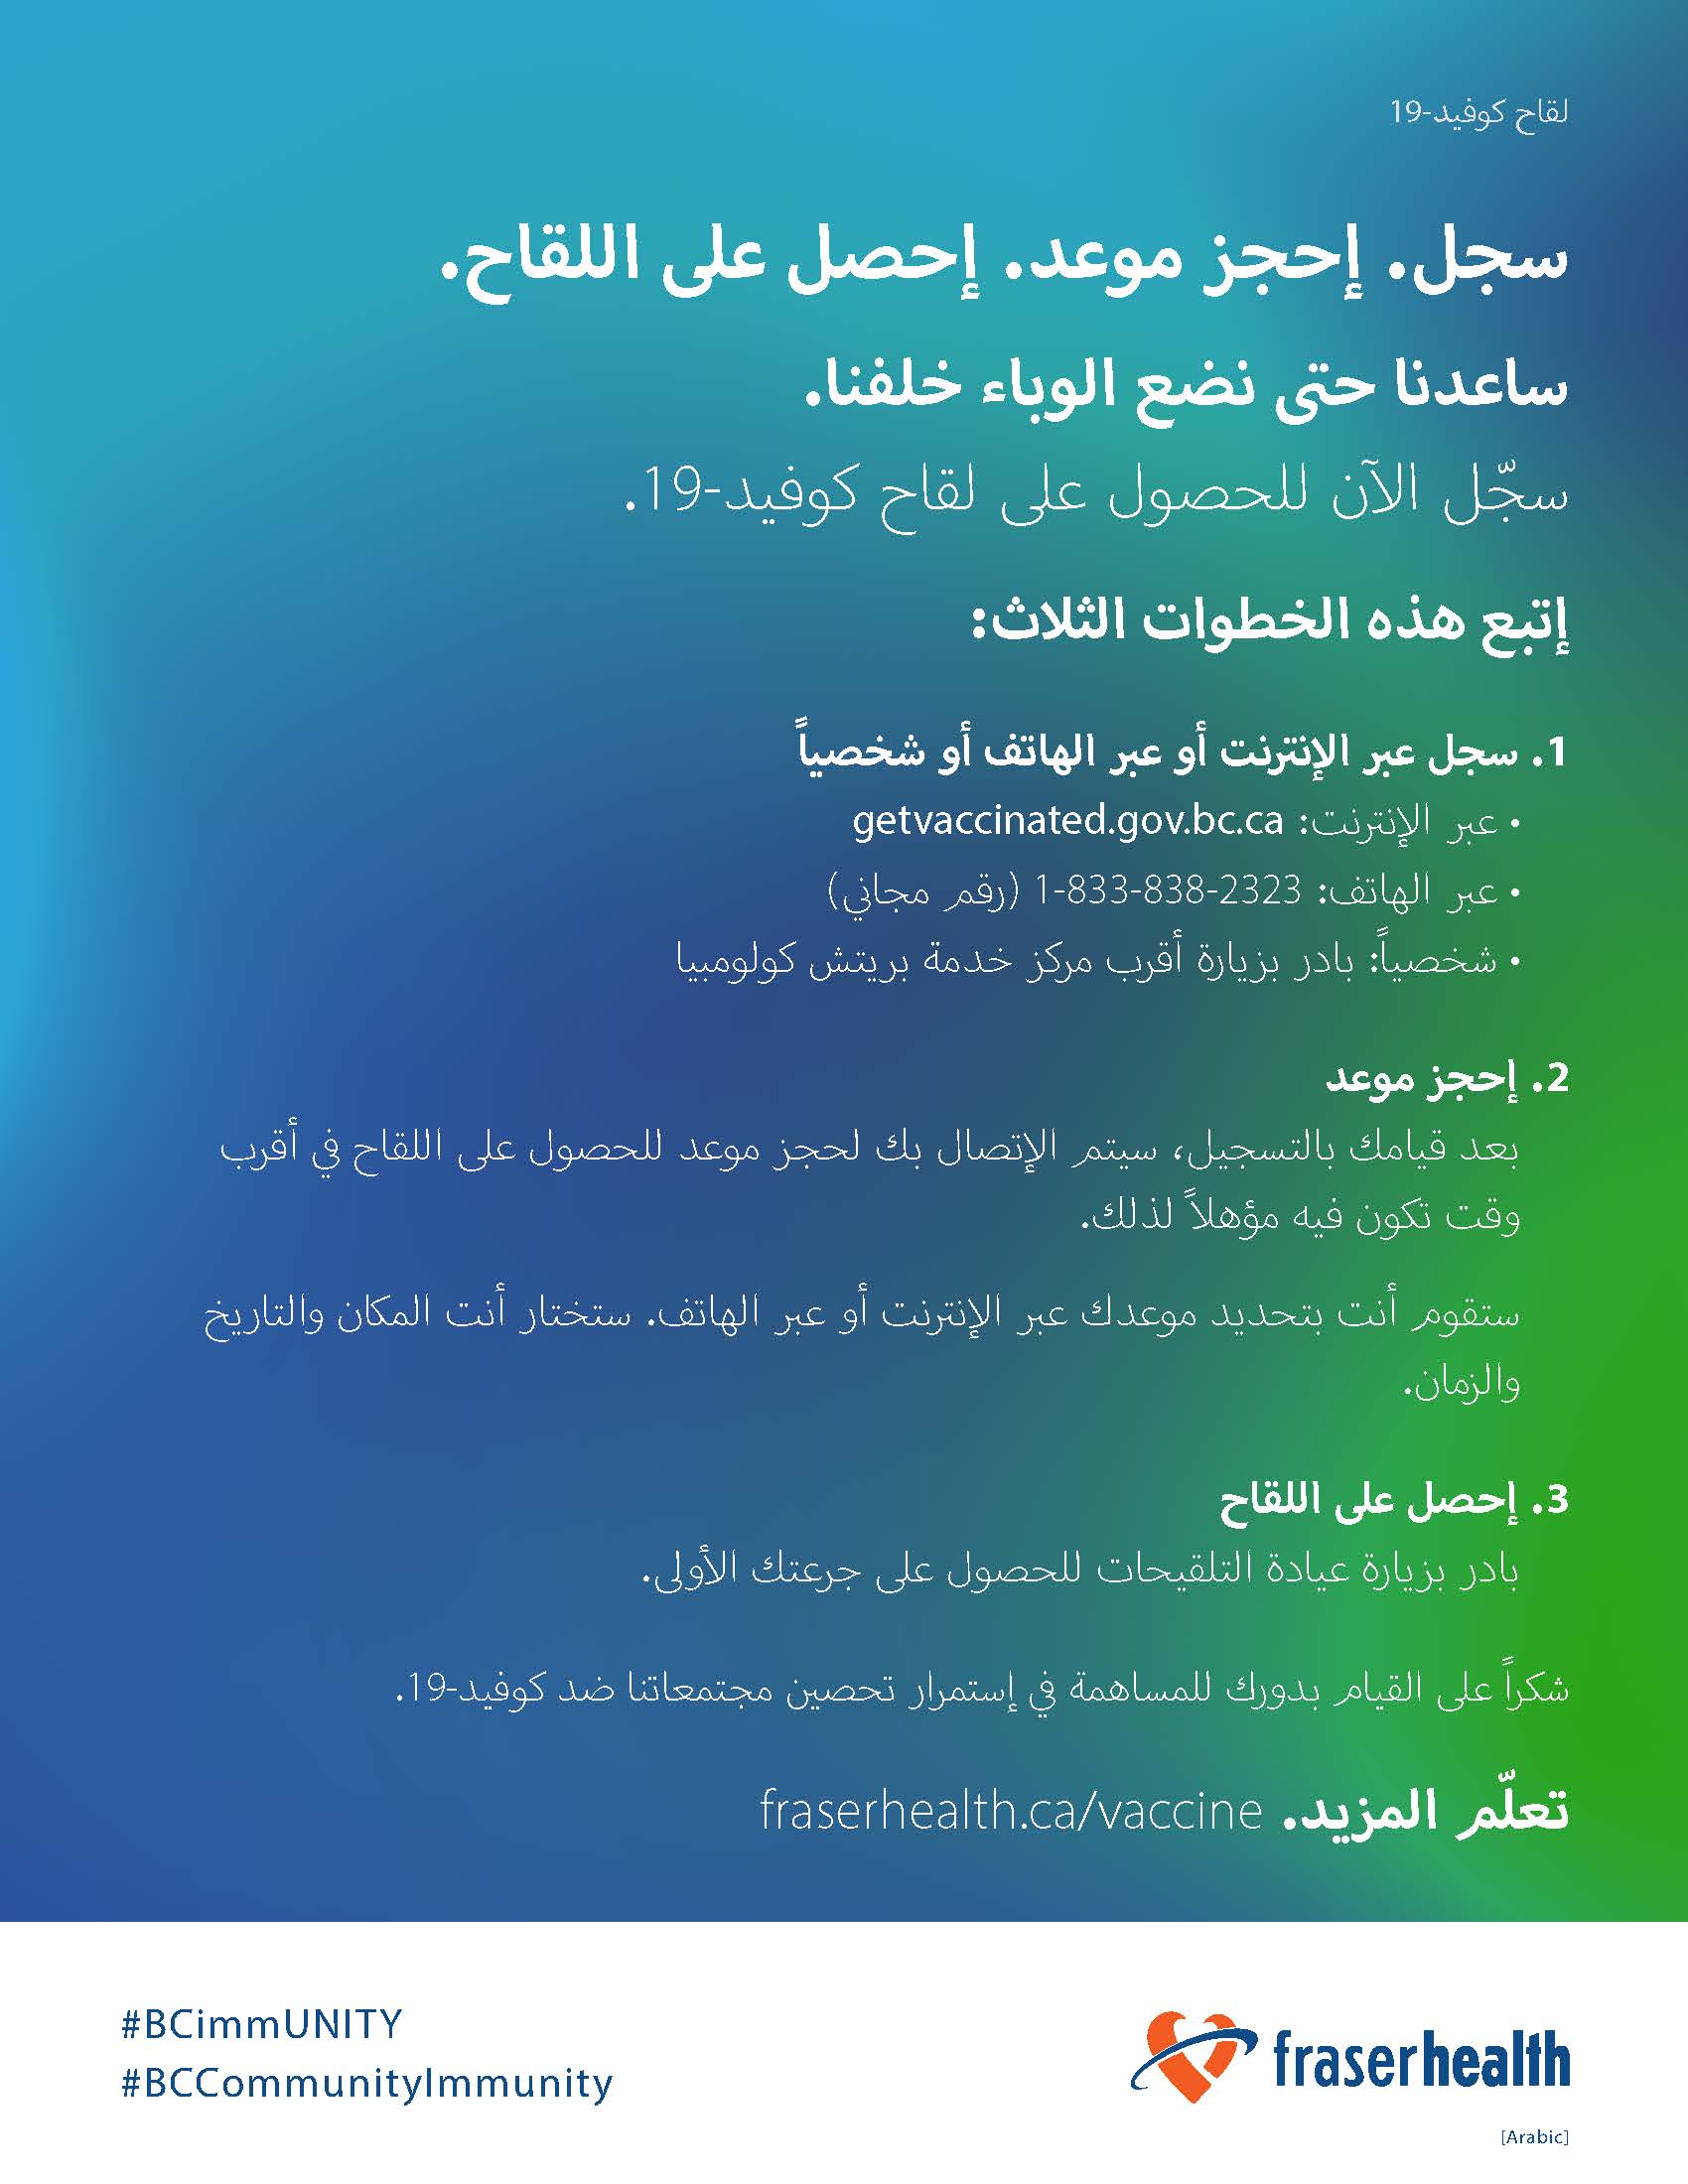 Vaccine registration for Arabic in colour